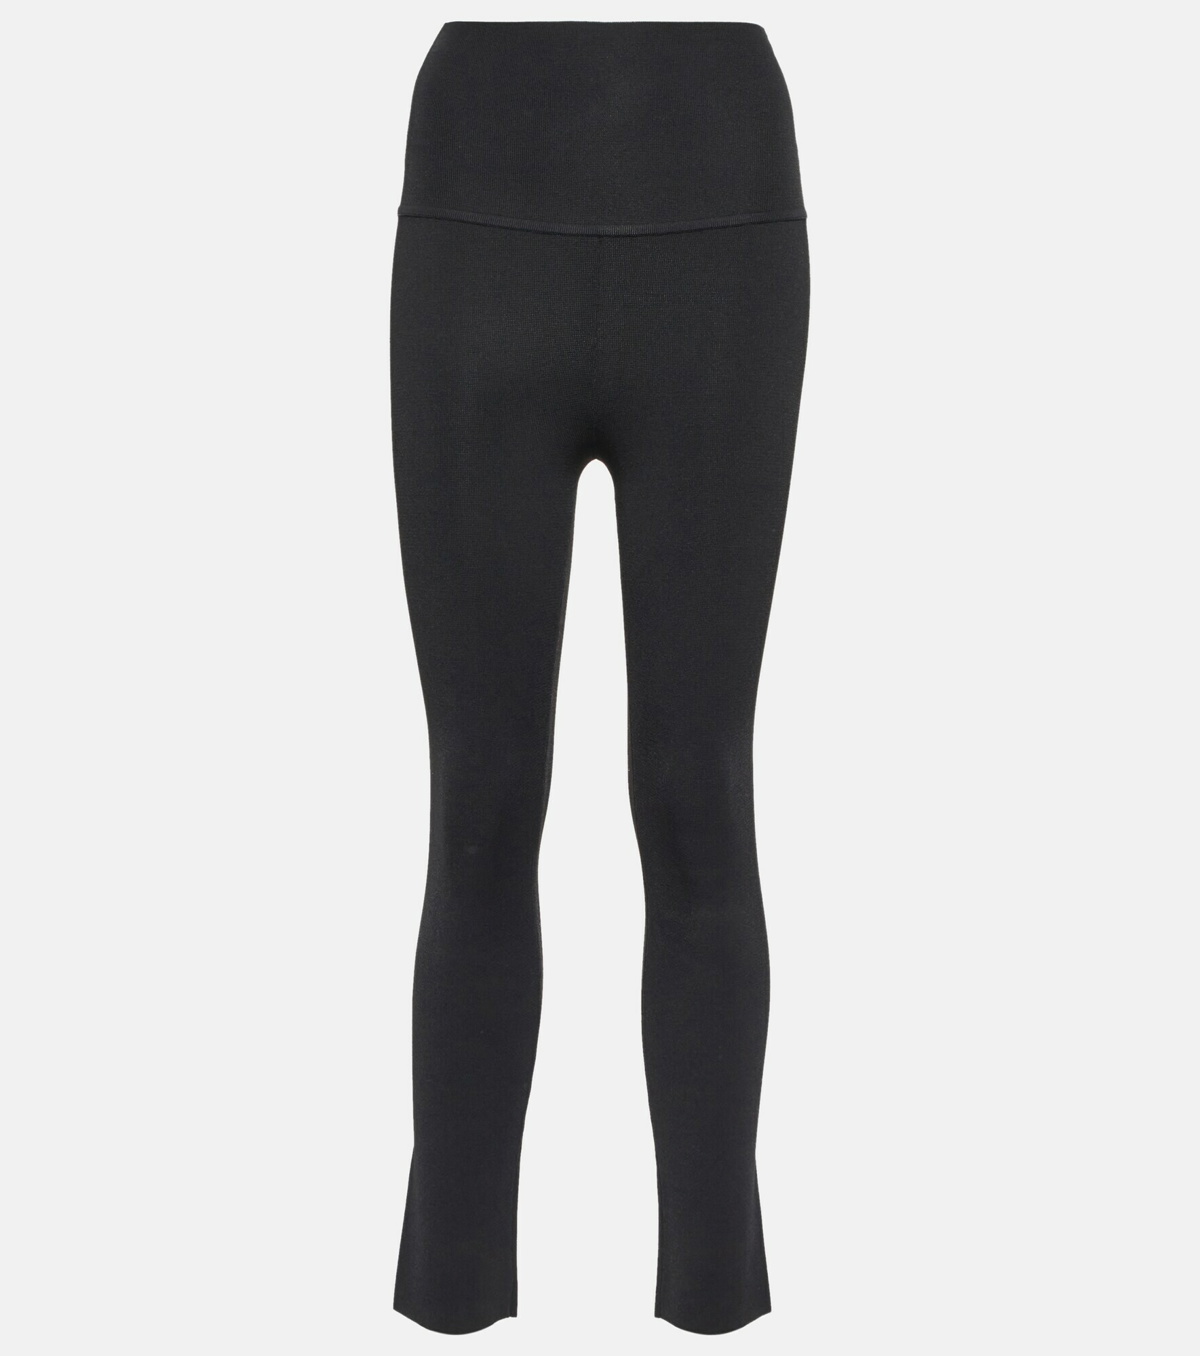 Lace stirrup leggings in black - Khaite